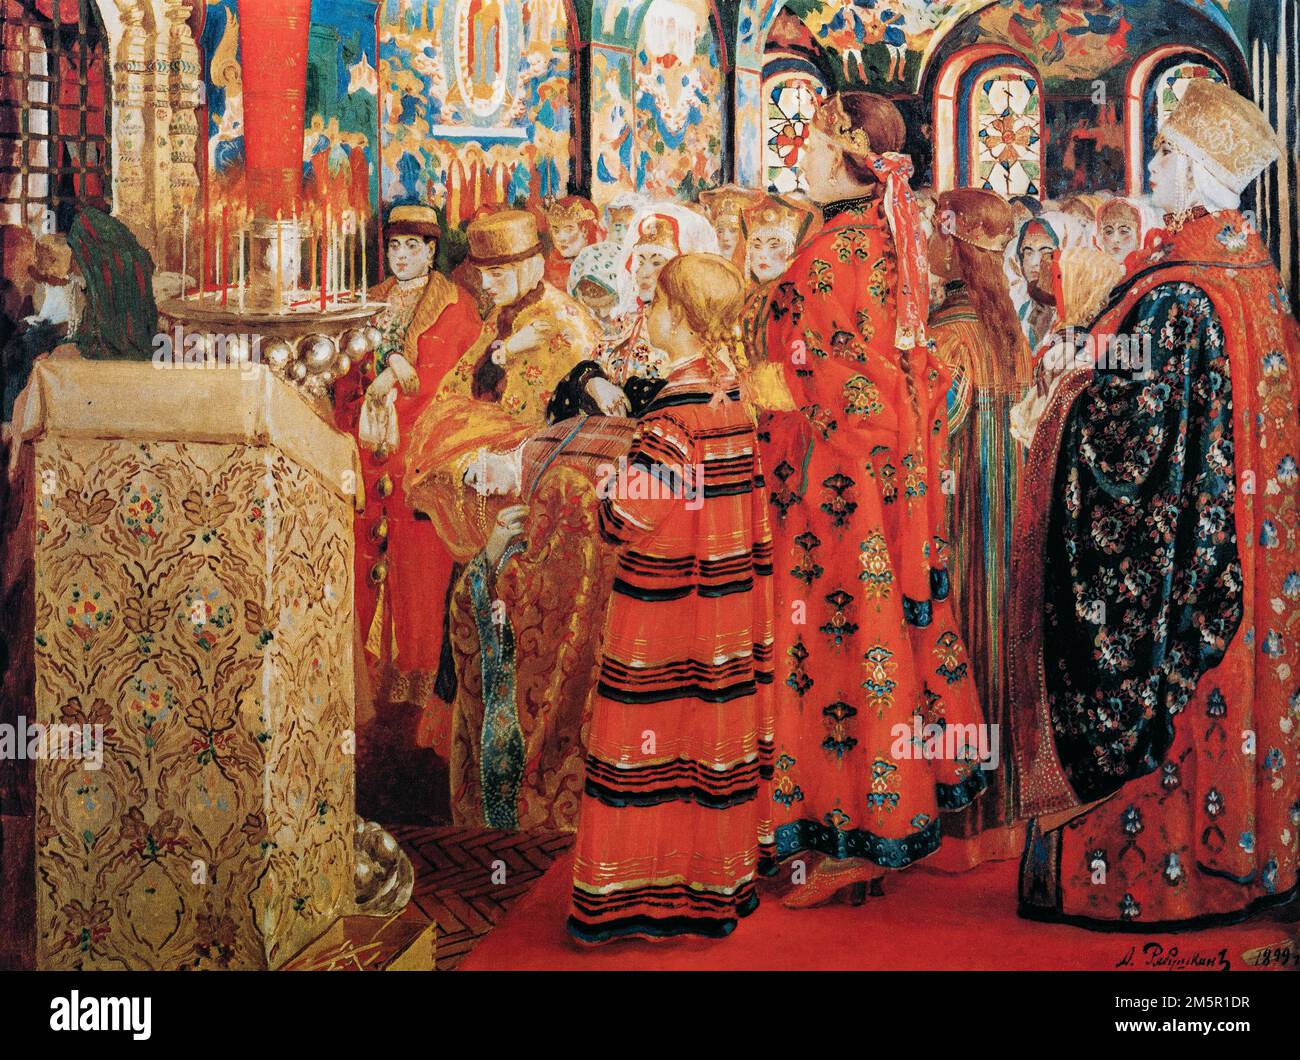 Painting By Russian Artist Andrei Ryabushkin, Russian Women Of 17th Century In Church. Andrei Ryabushkin Was Russian Painter. His Major Works Were Dev Stock Photo